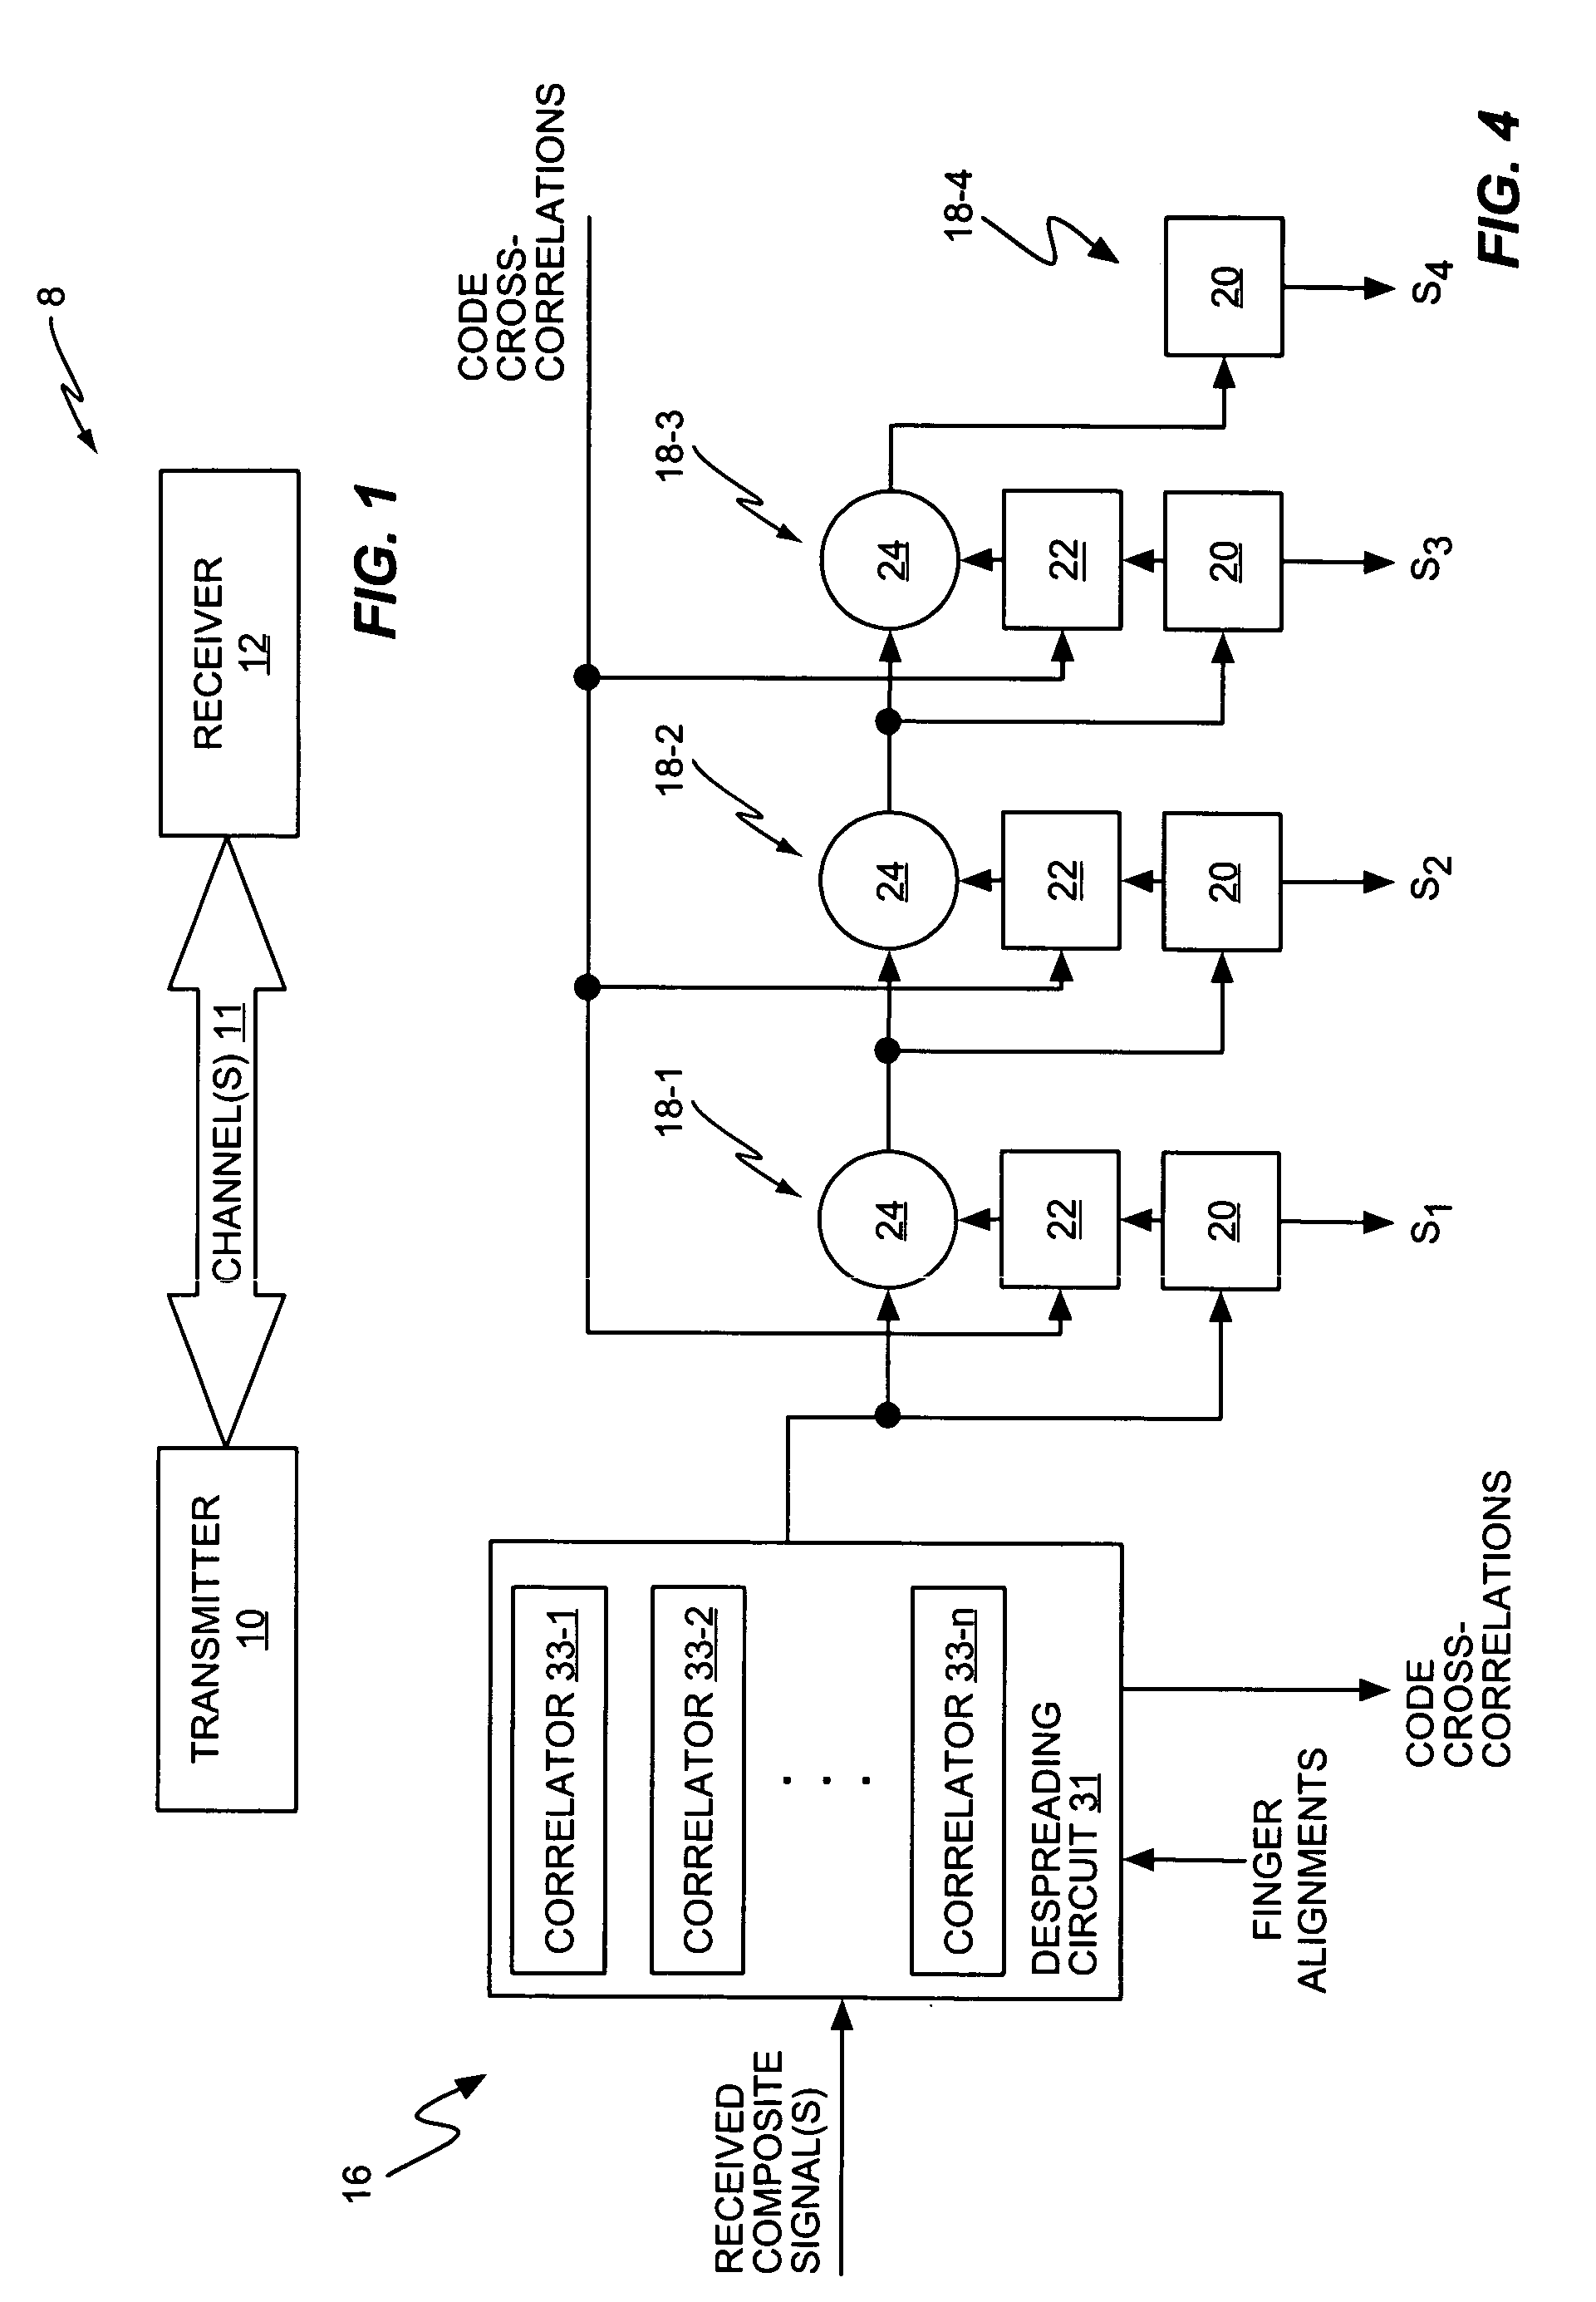 Successive interference cancellation in a generalized RAKE receiver architecture